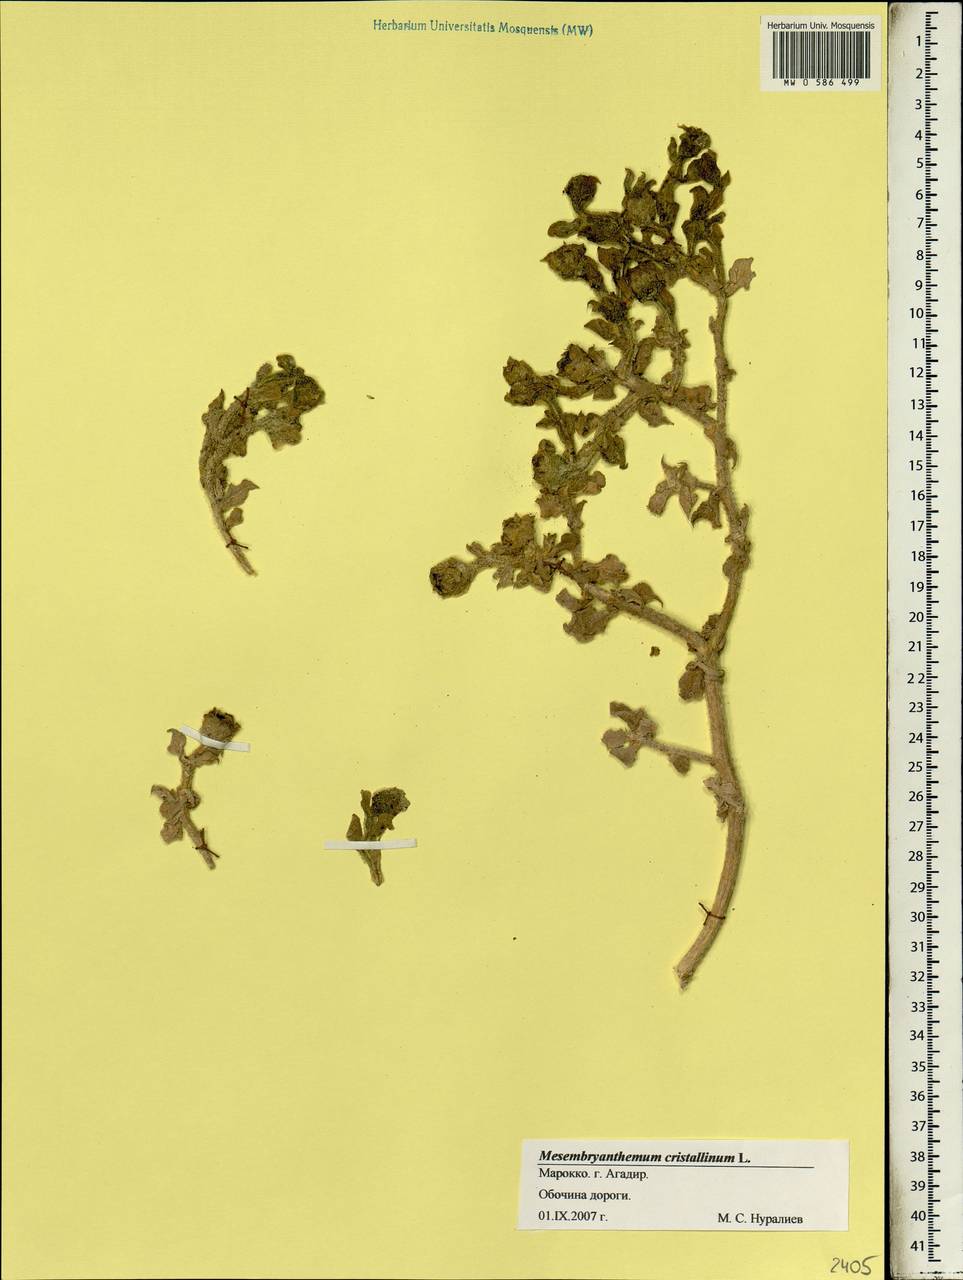 Mesembryanthemum crystallinum L., Африка (AFR) (Марокко)